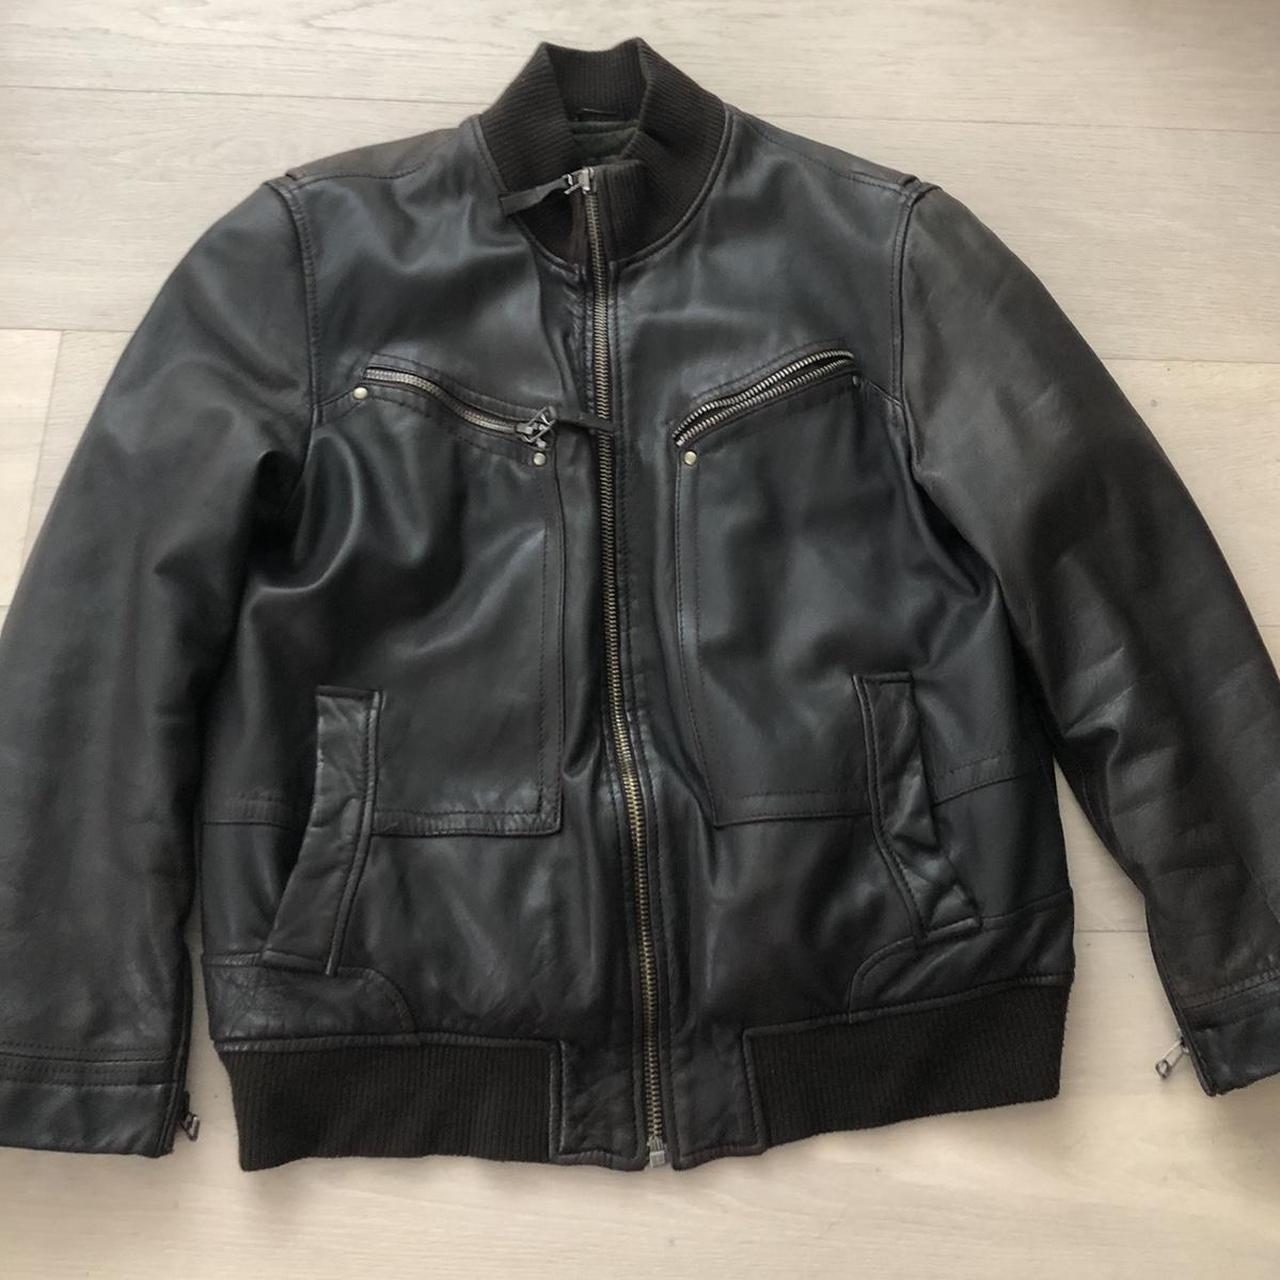 SOLD brown leather jacket | vintage #leatherjacket... - Depop